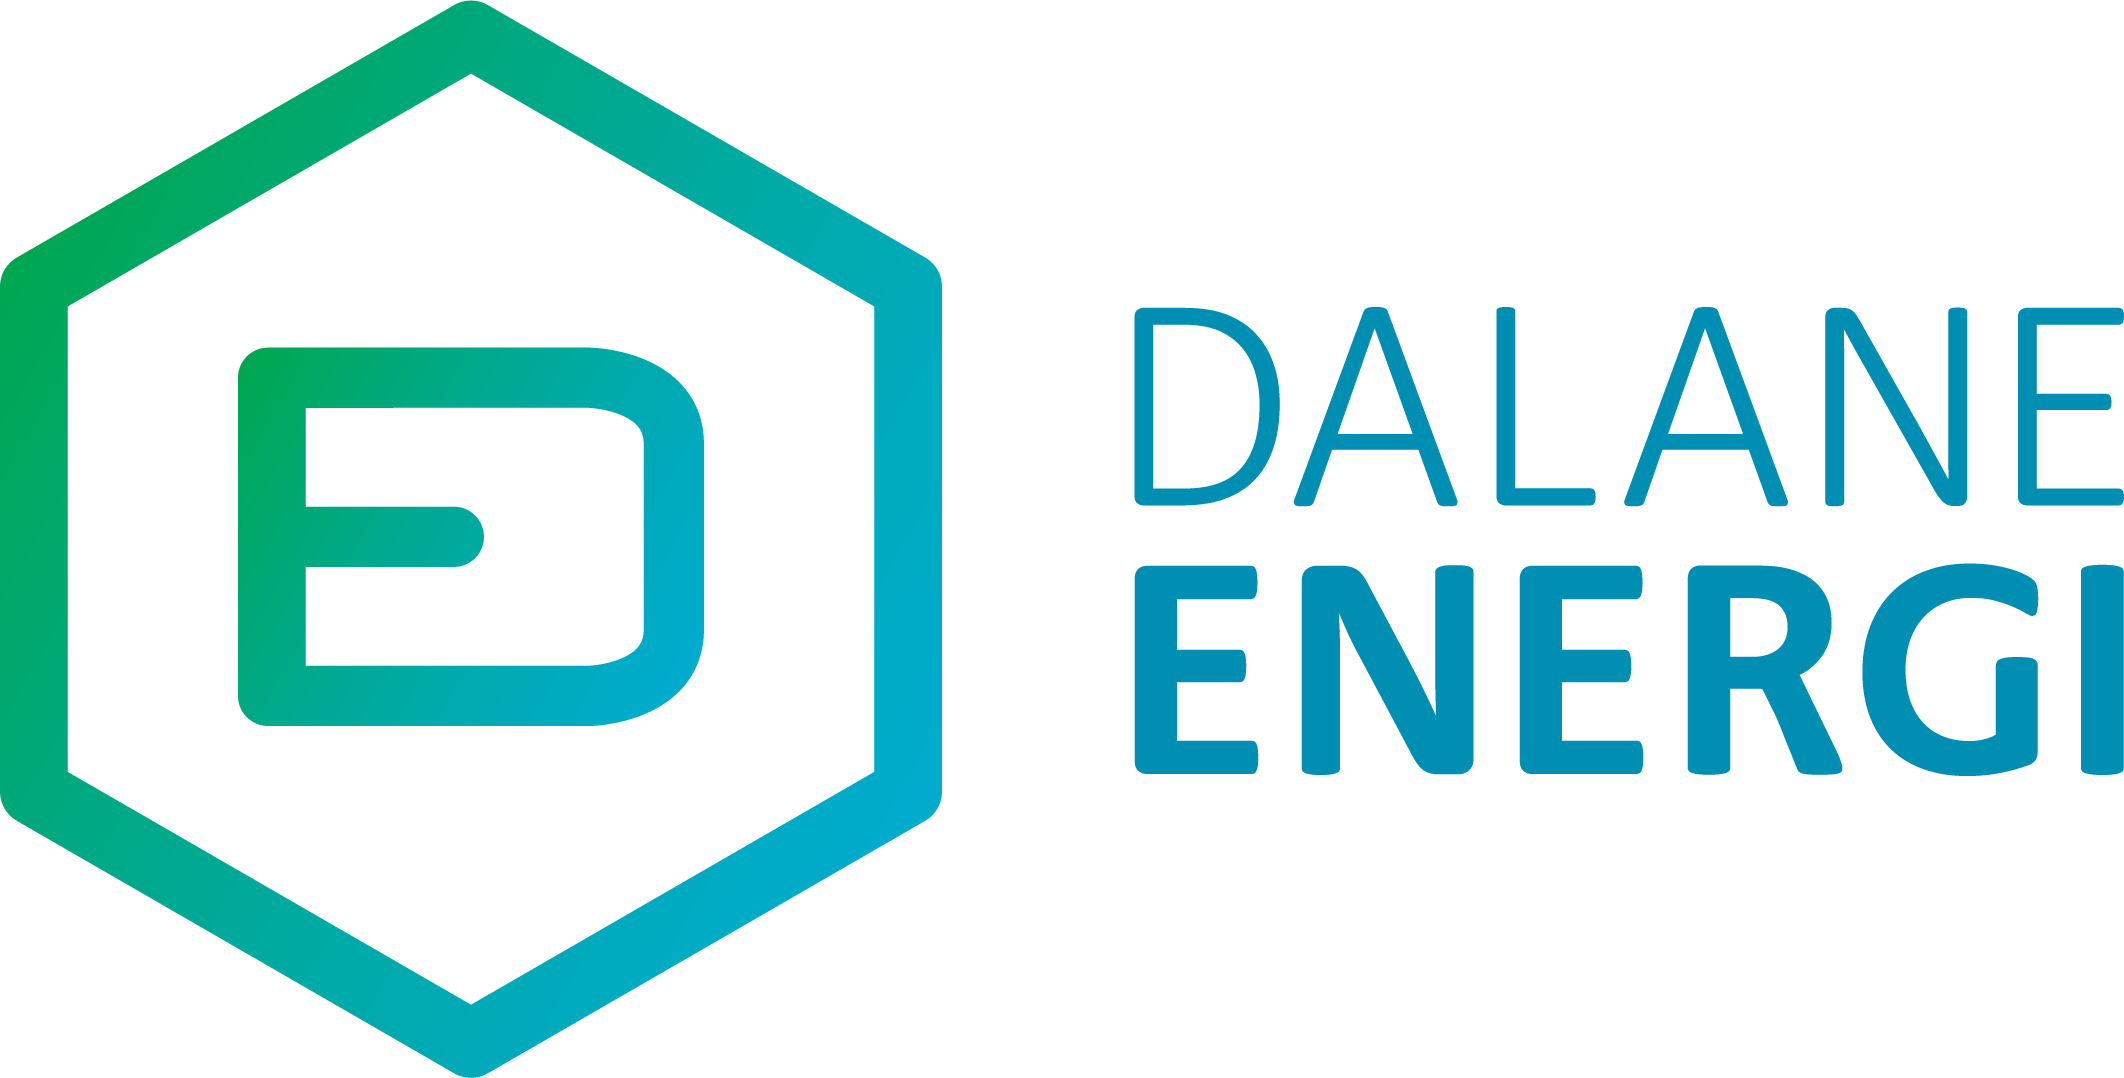 Dalane Energi logo